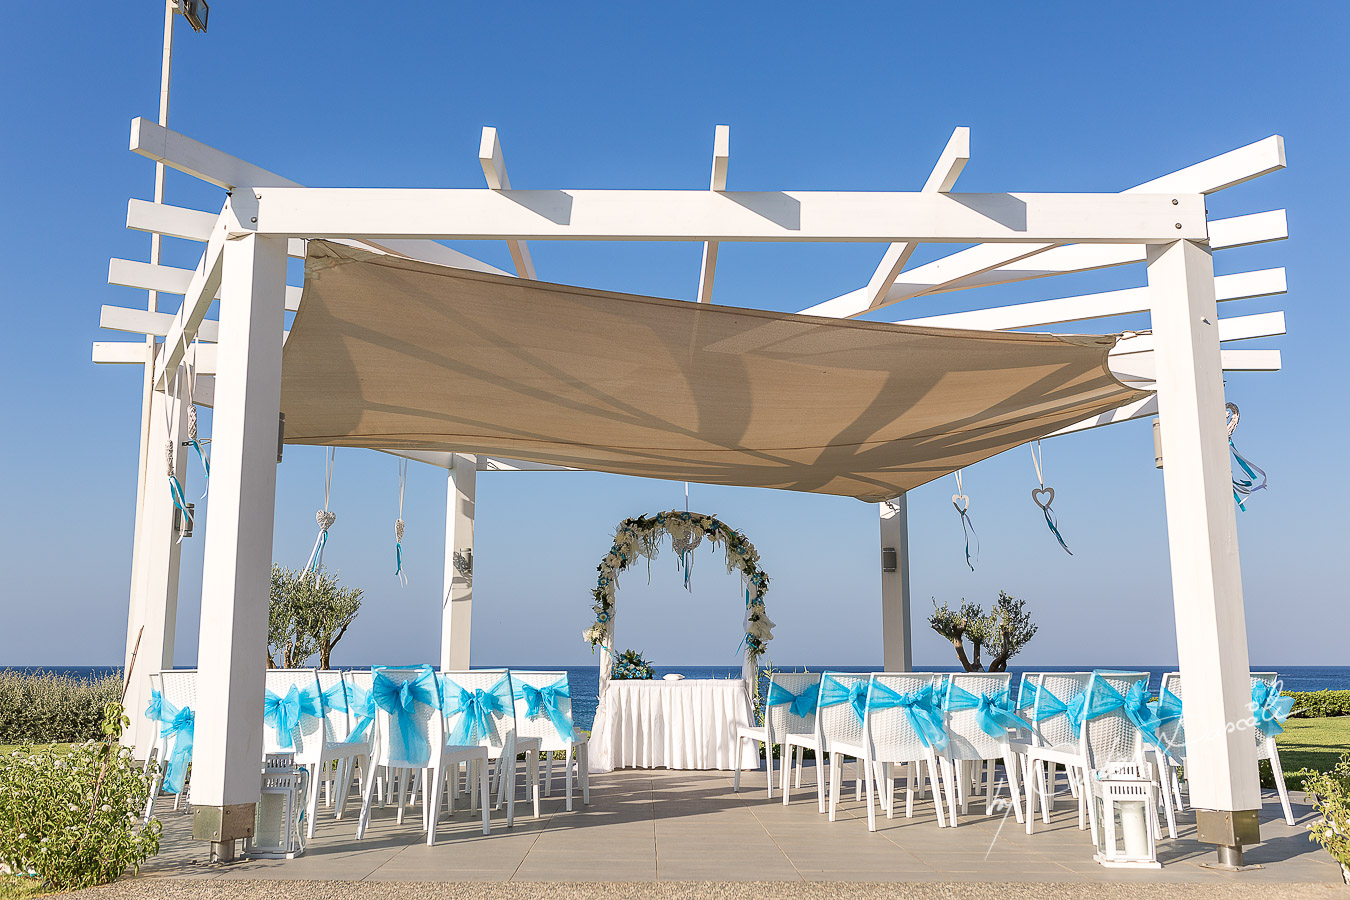 Wedding gazebo captured before wedding ceremony at Pernera Beach Hotel in Protaras, Cyprus.